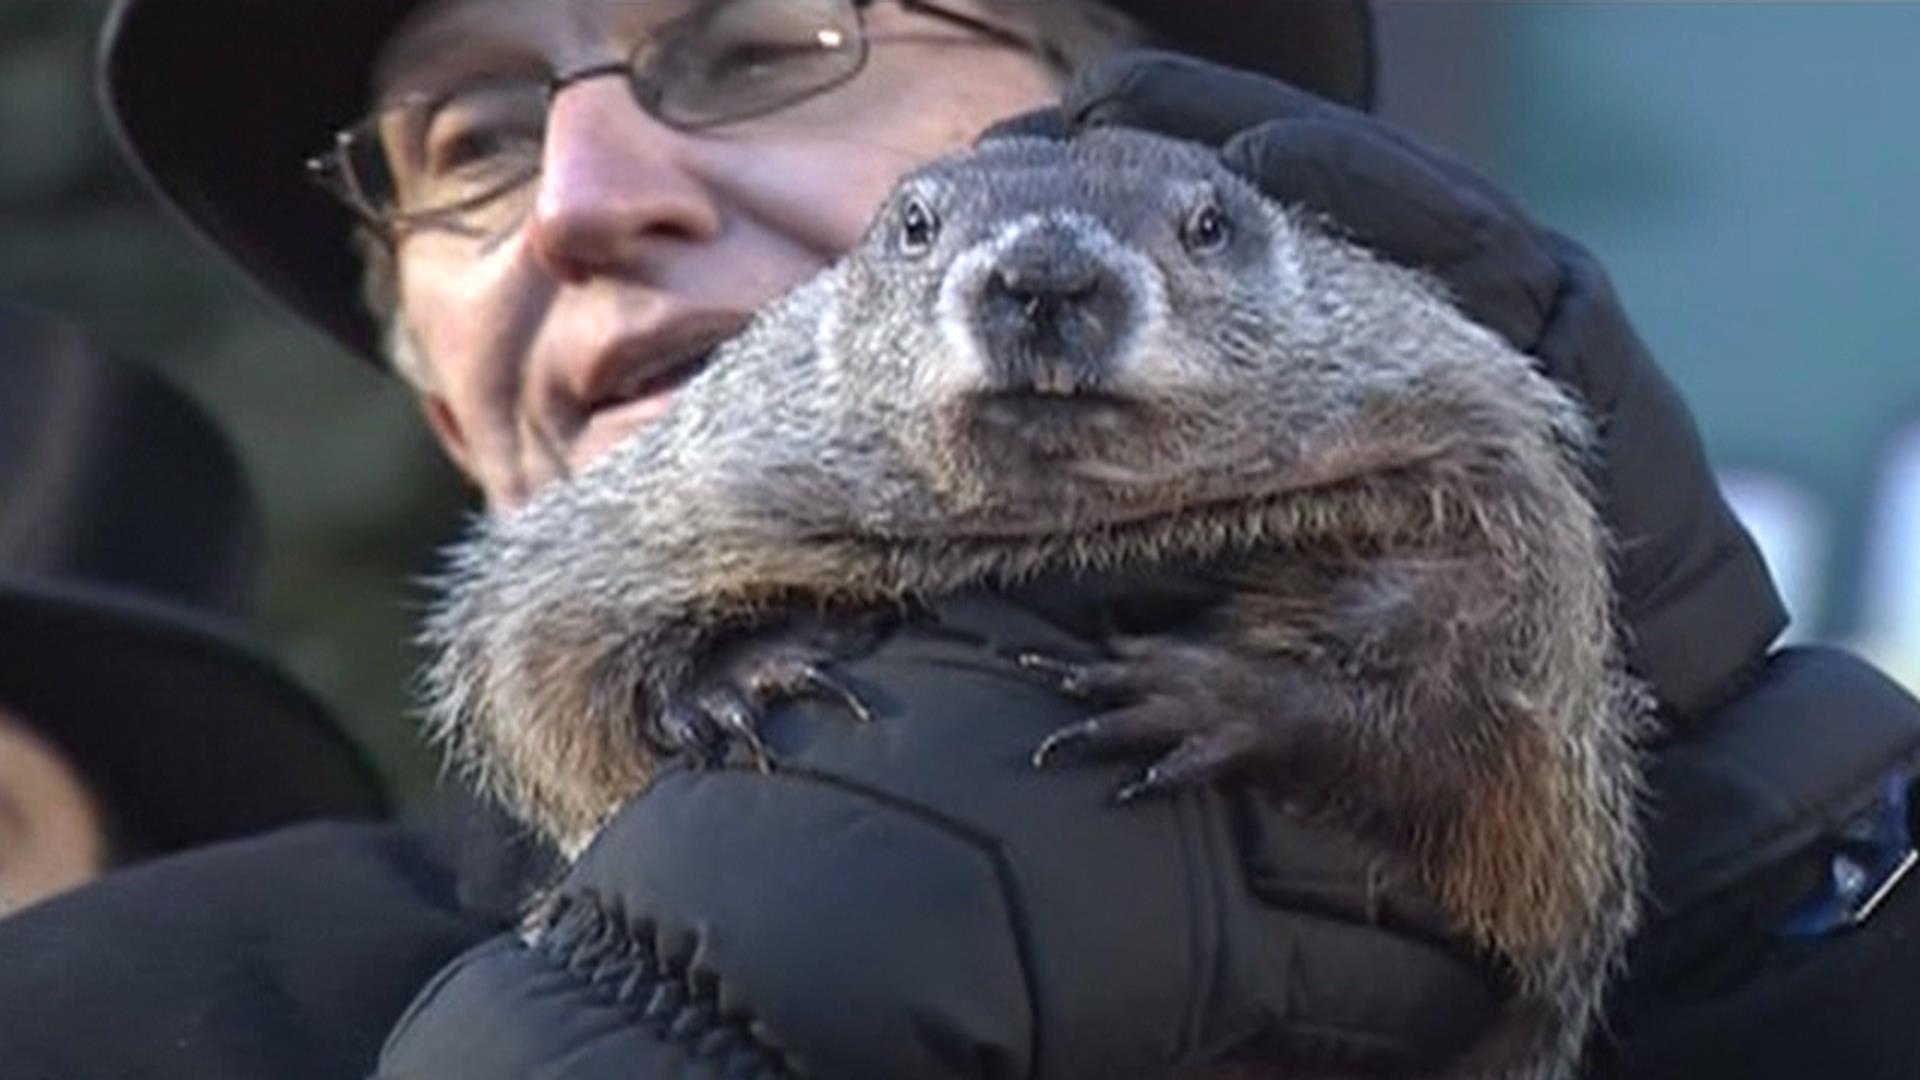 Groundhog Day: Punxsutawney Phil says spring is just around